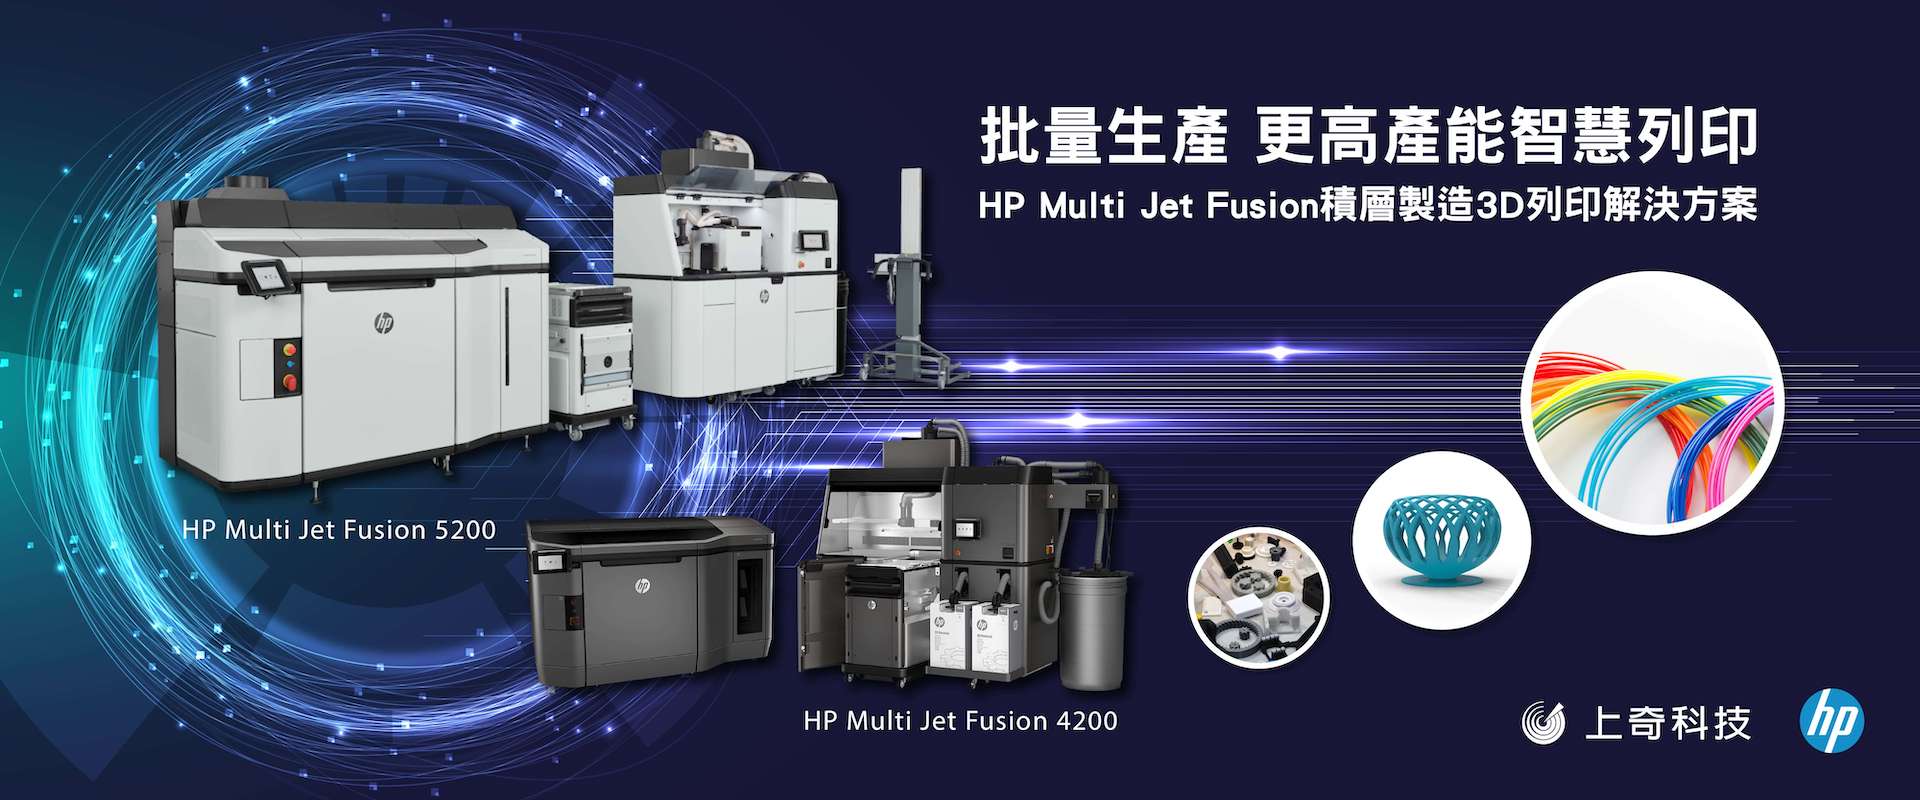 HP Multi Jet Fusion積層製造設備